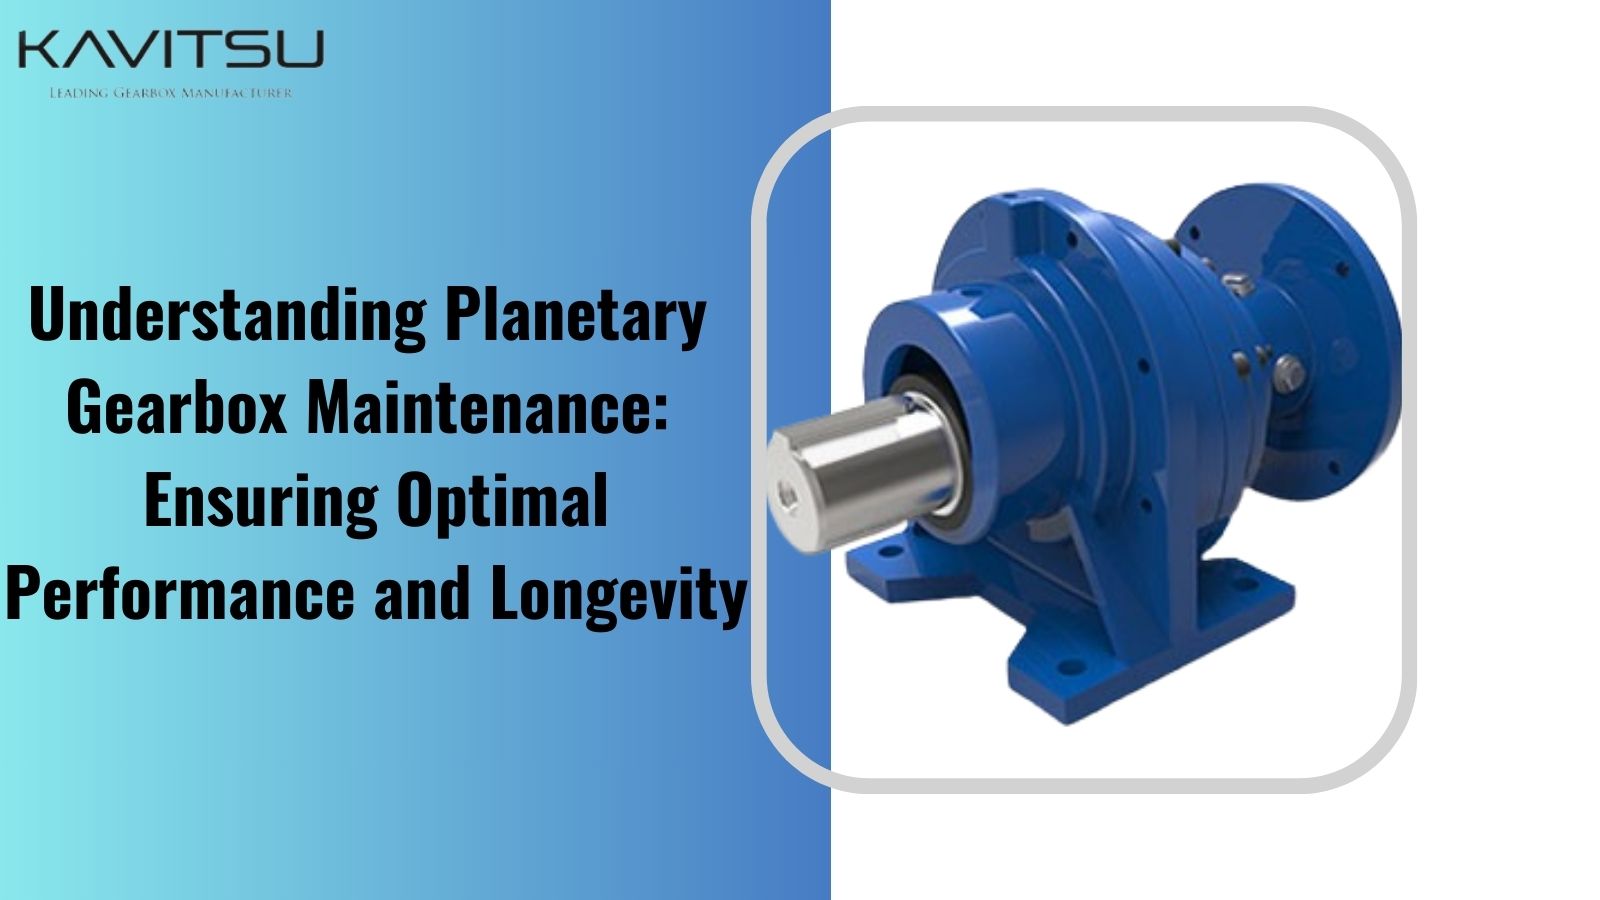  Understanding Planetary Gearbox Maintenance: Ensuring
Optimal Performance and Longevity